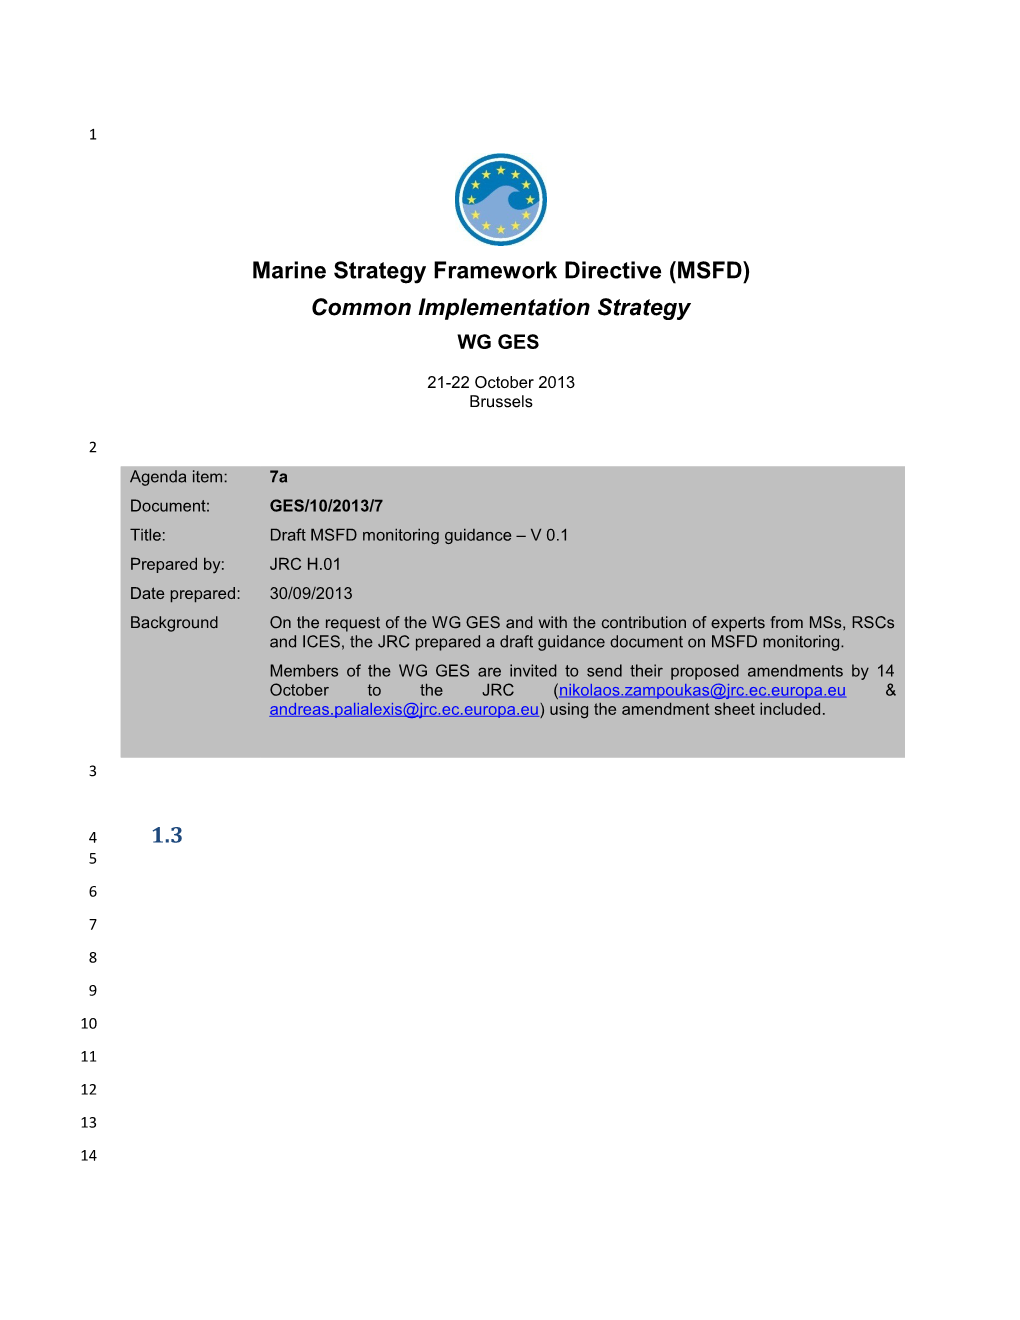 Amendment Sheet for the Draft MSFD Monitoring Guidance: Version 30/09/2013